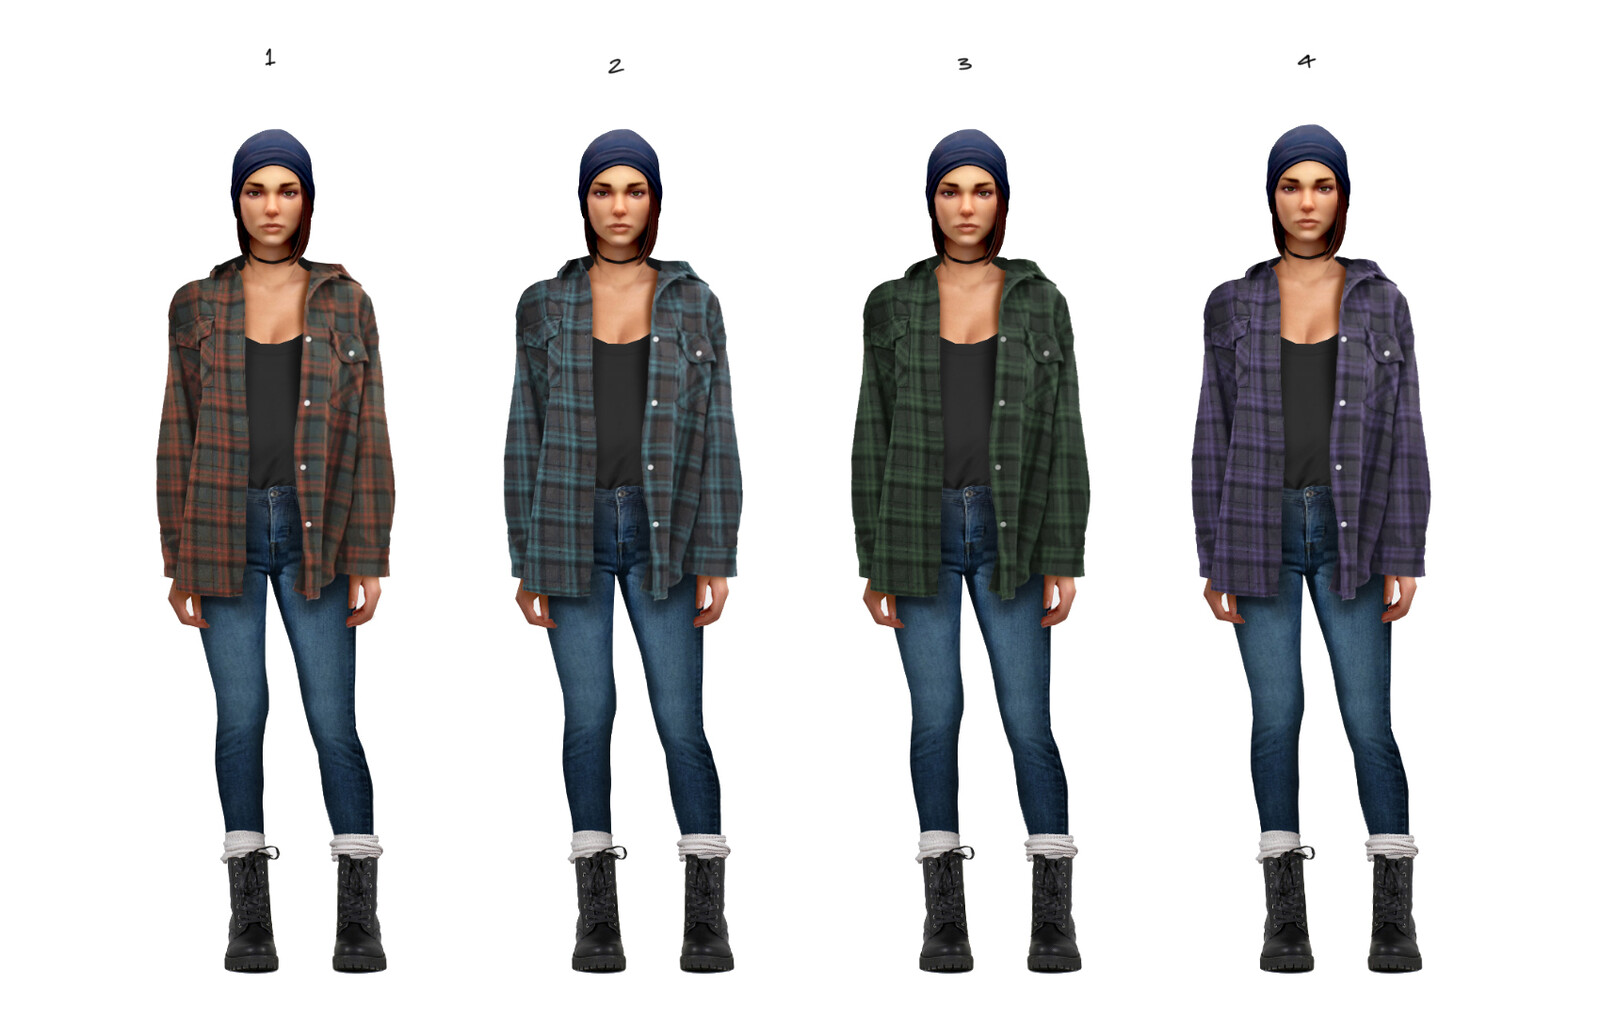 Wavelengths DLC - Winter Outfit Options 2